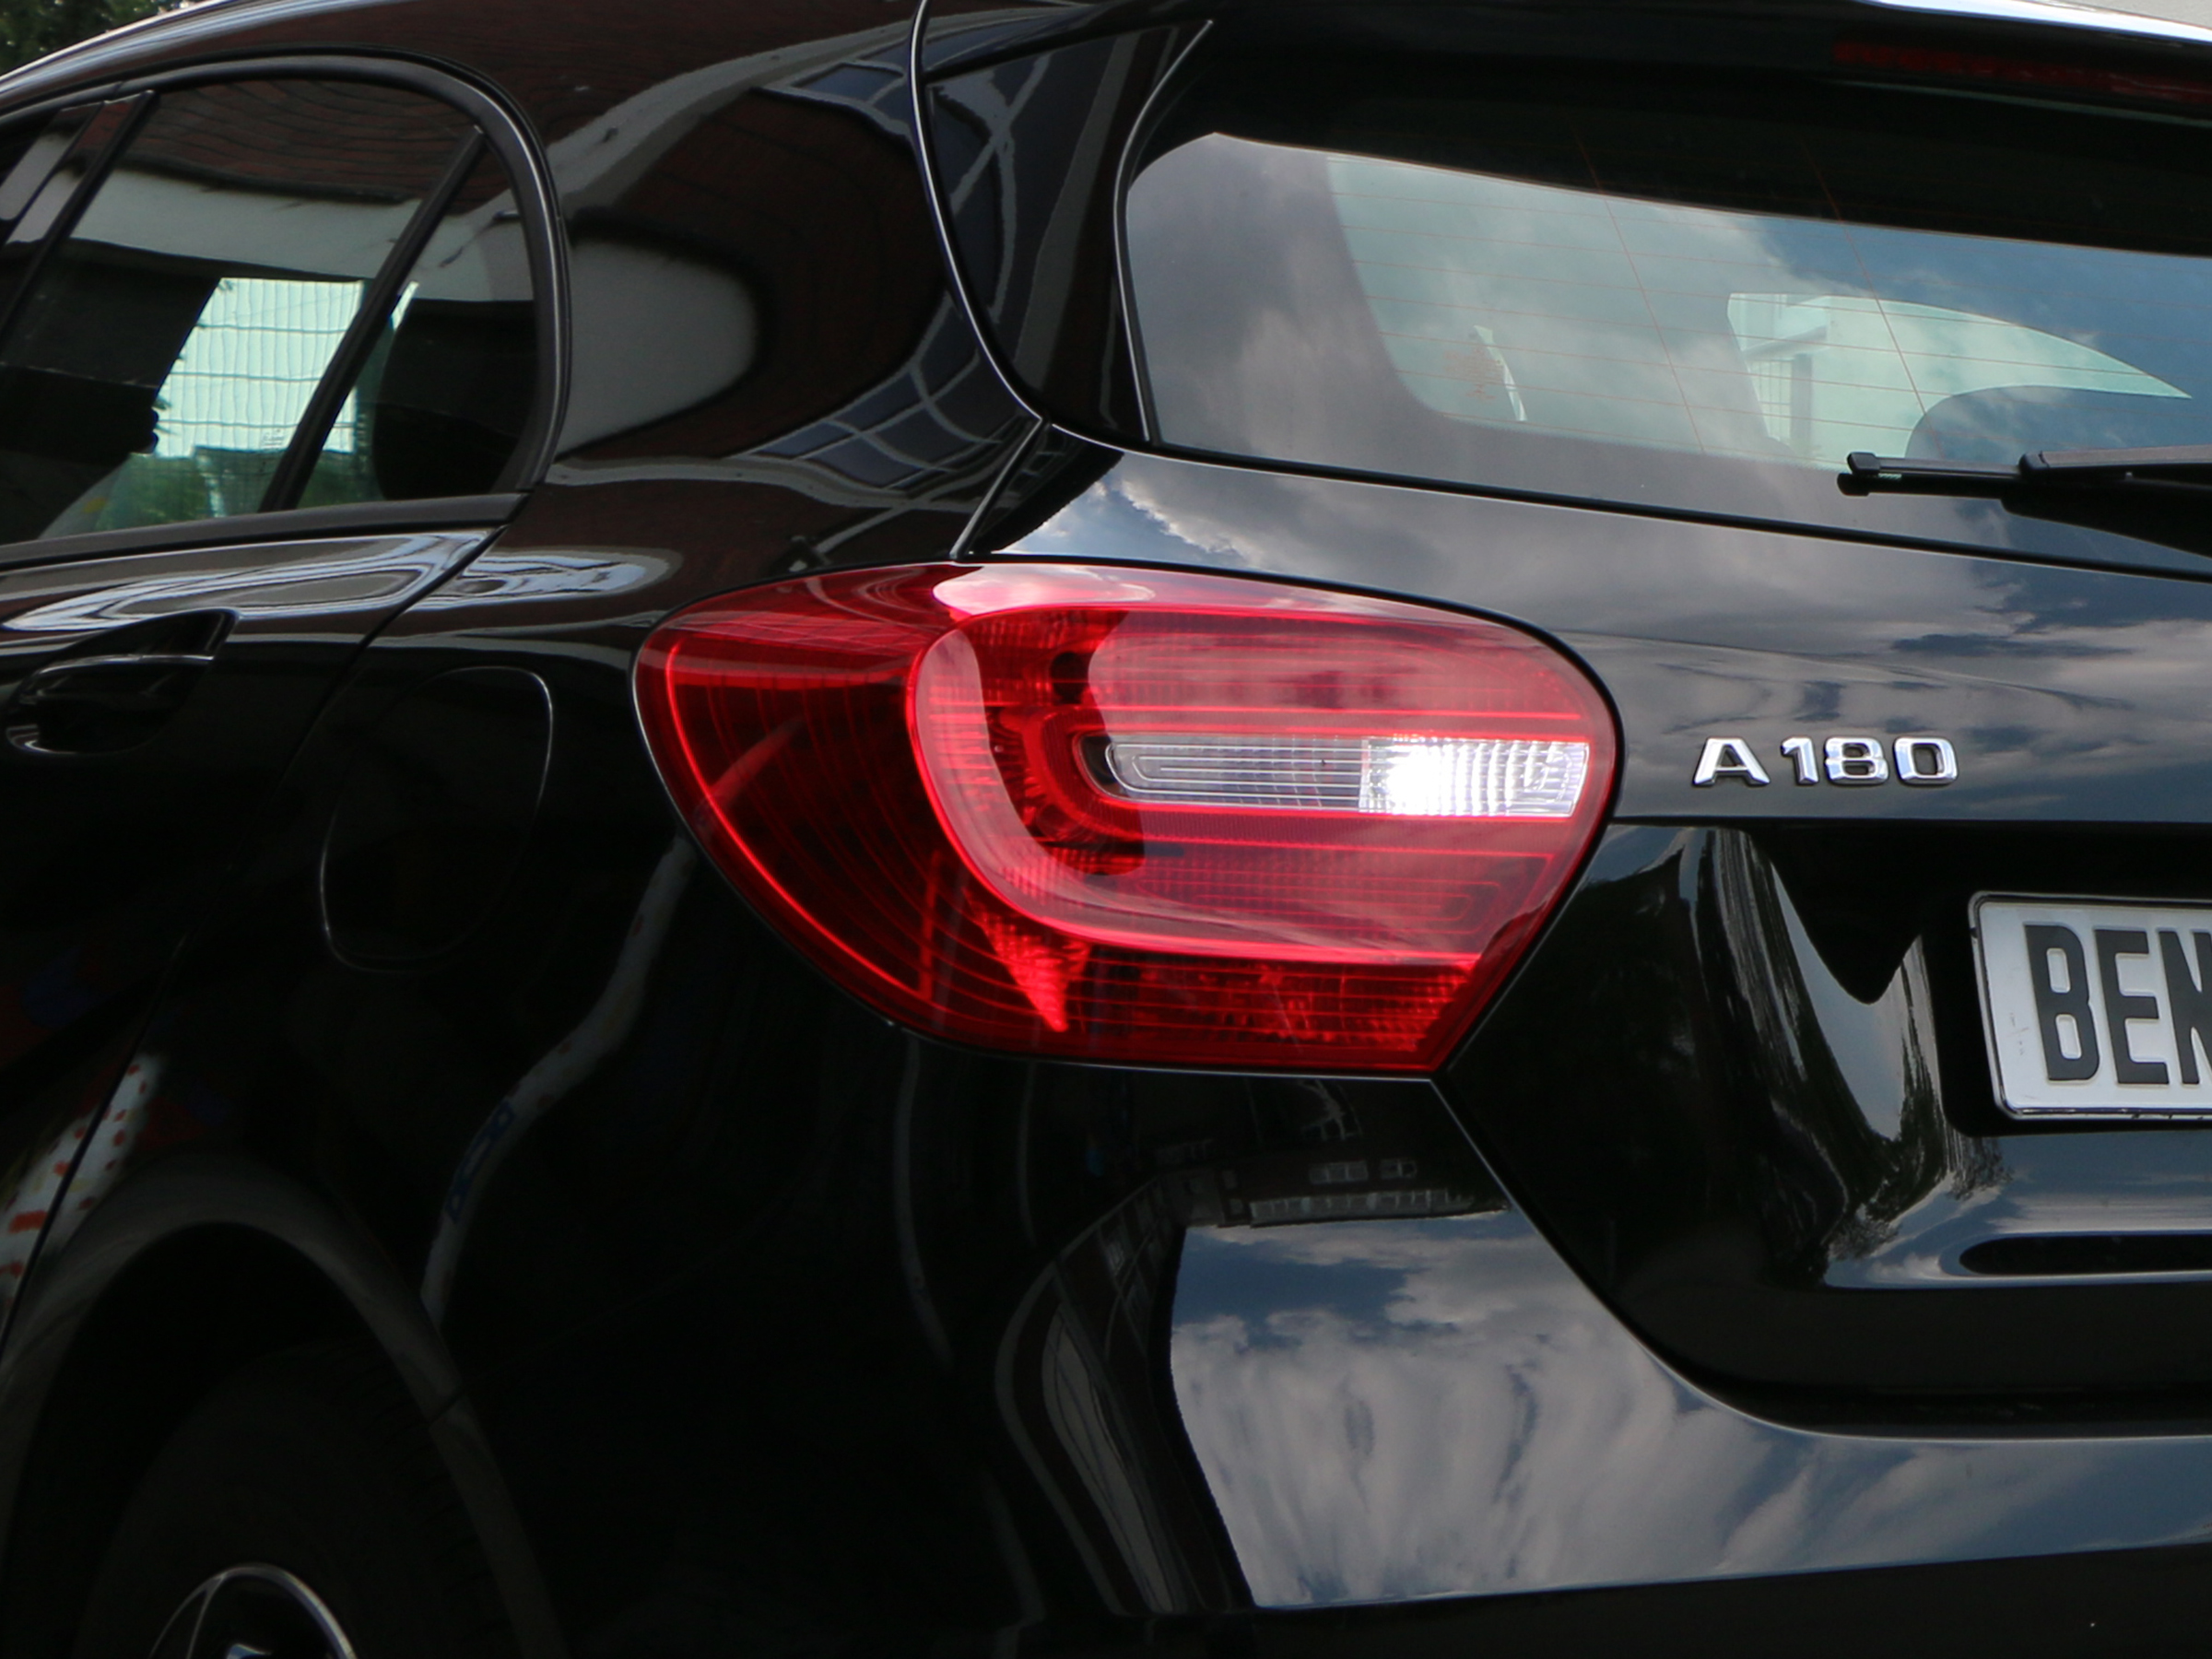 10x5 W CREE® LED Rückfahrlicht Mercedes A-Klasse W176, weiss, LED  Rückfahrlicht Mercedes, LED Rückfahrlicht